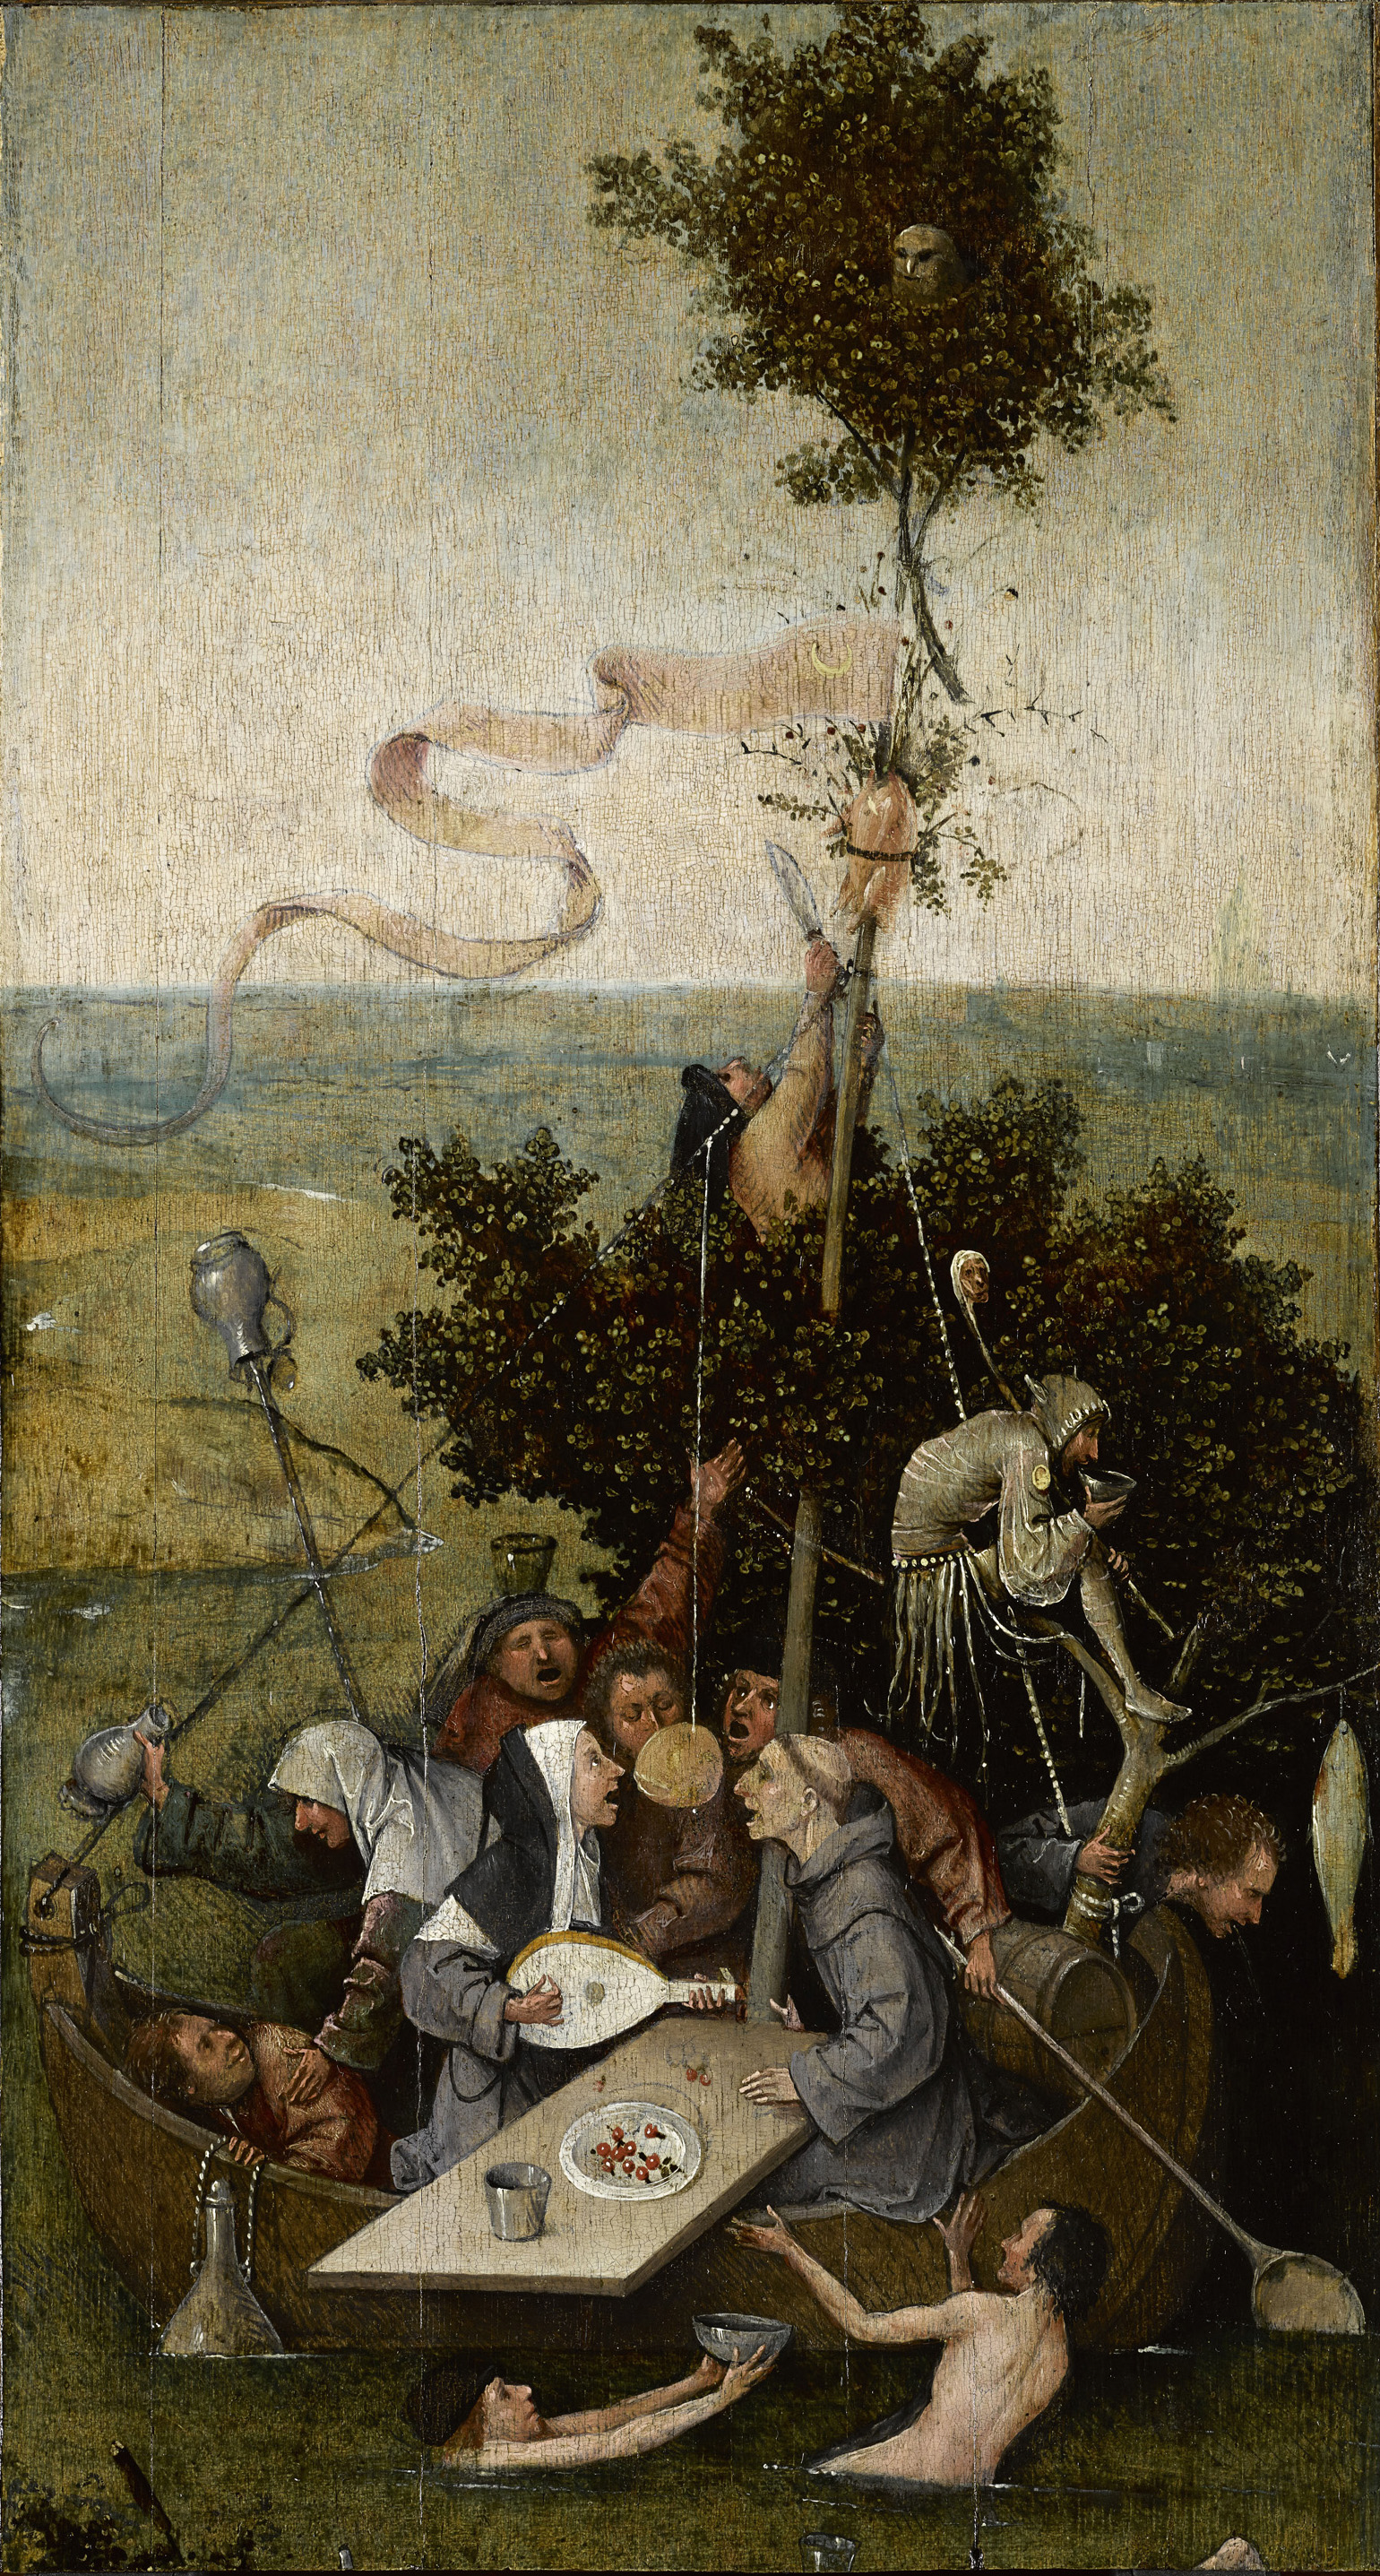    . Ship of Fools by Hieronymus Bosch